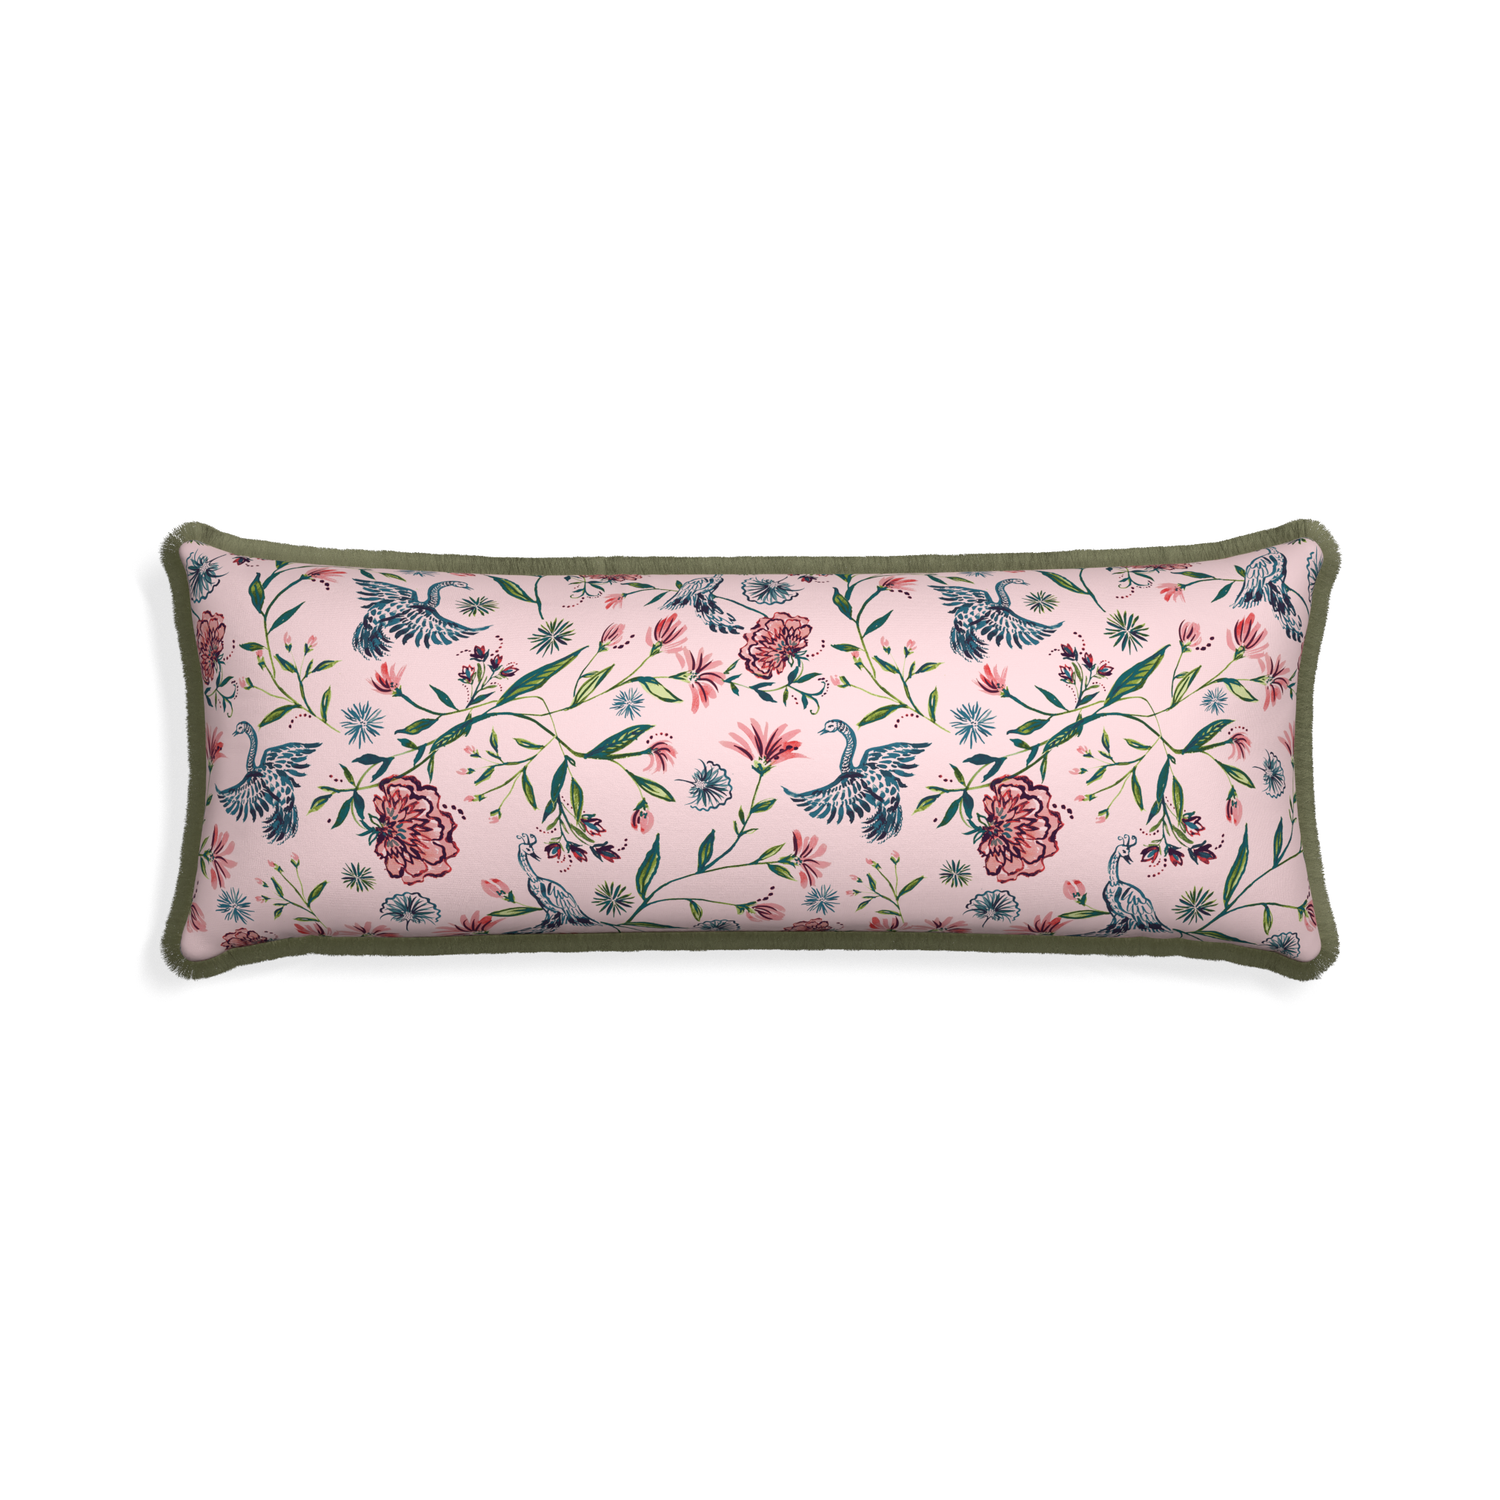 Xl-lumbar daphne rose custom pillow with sage fringe on white background